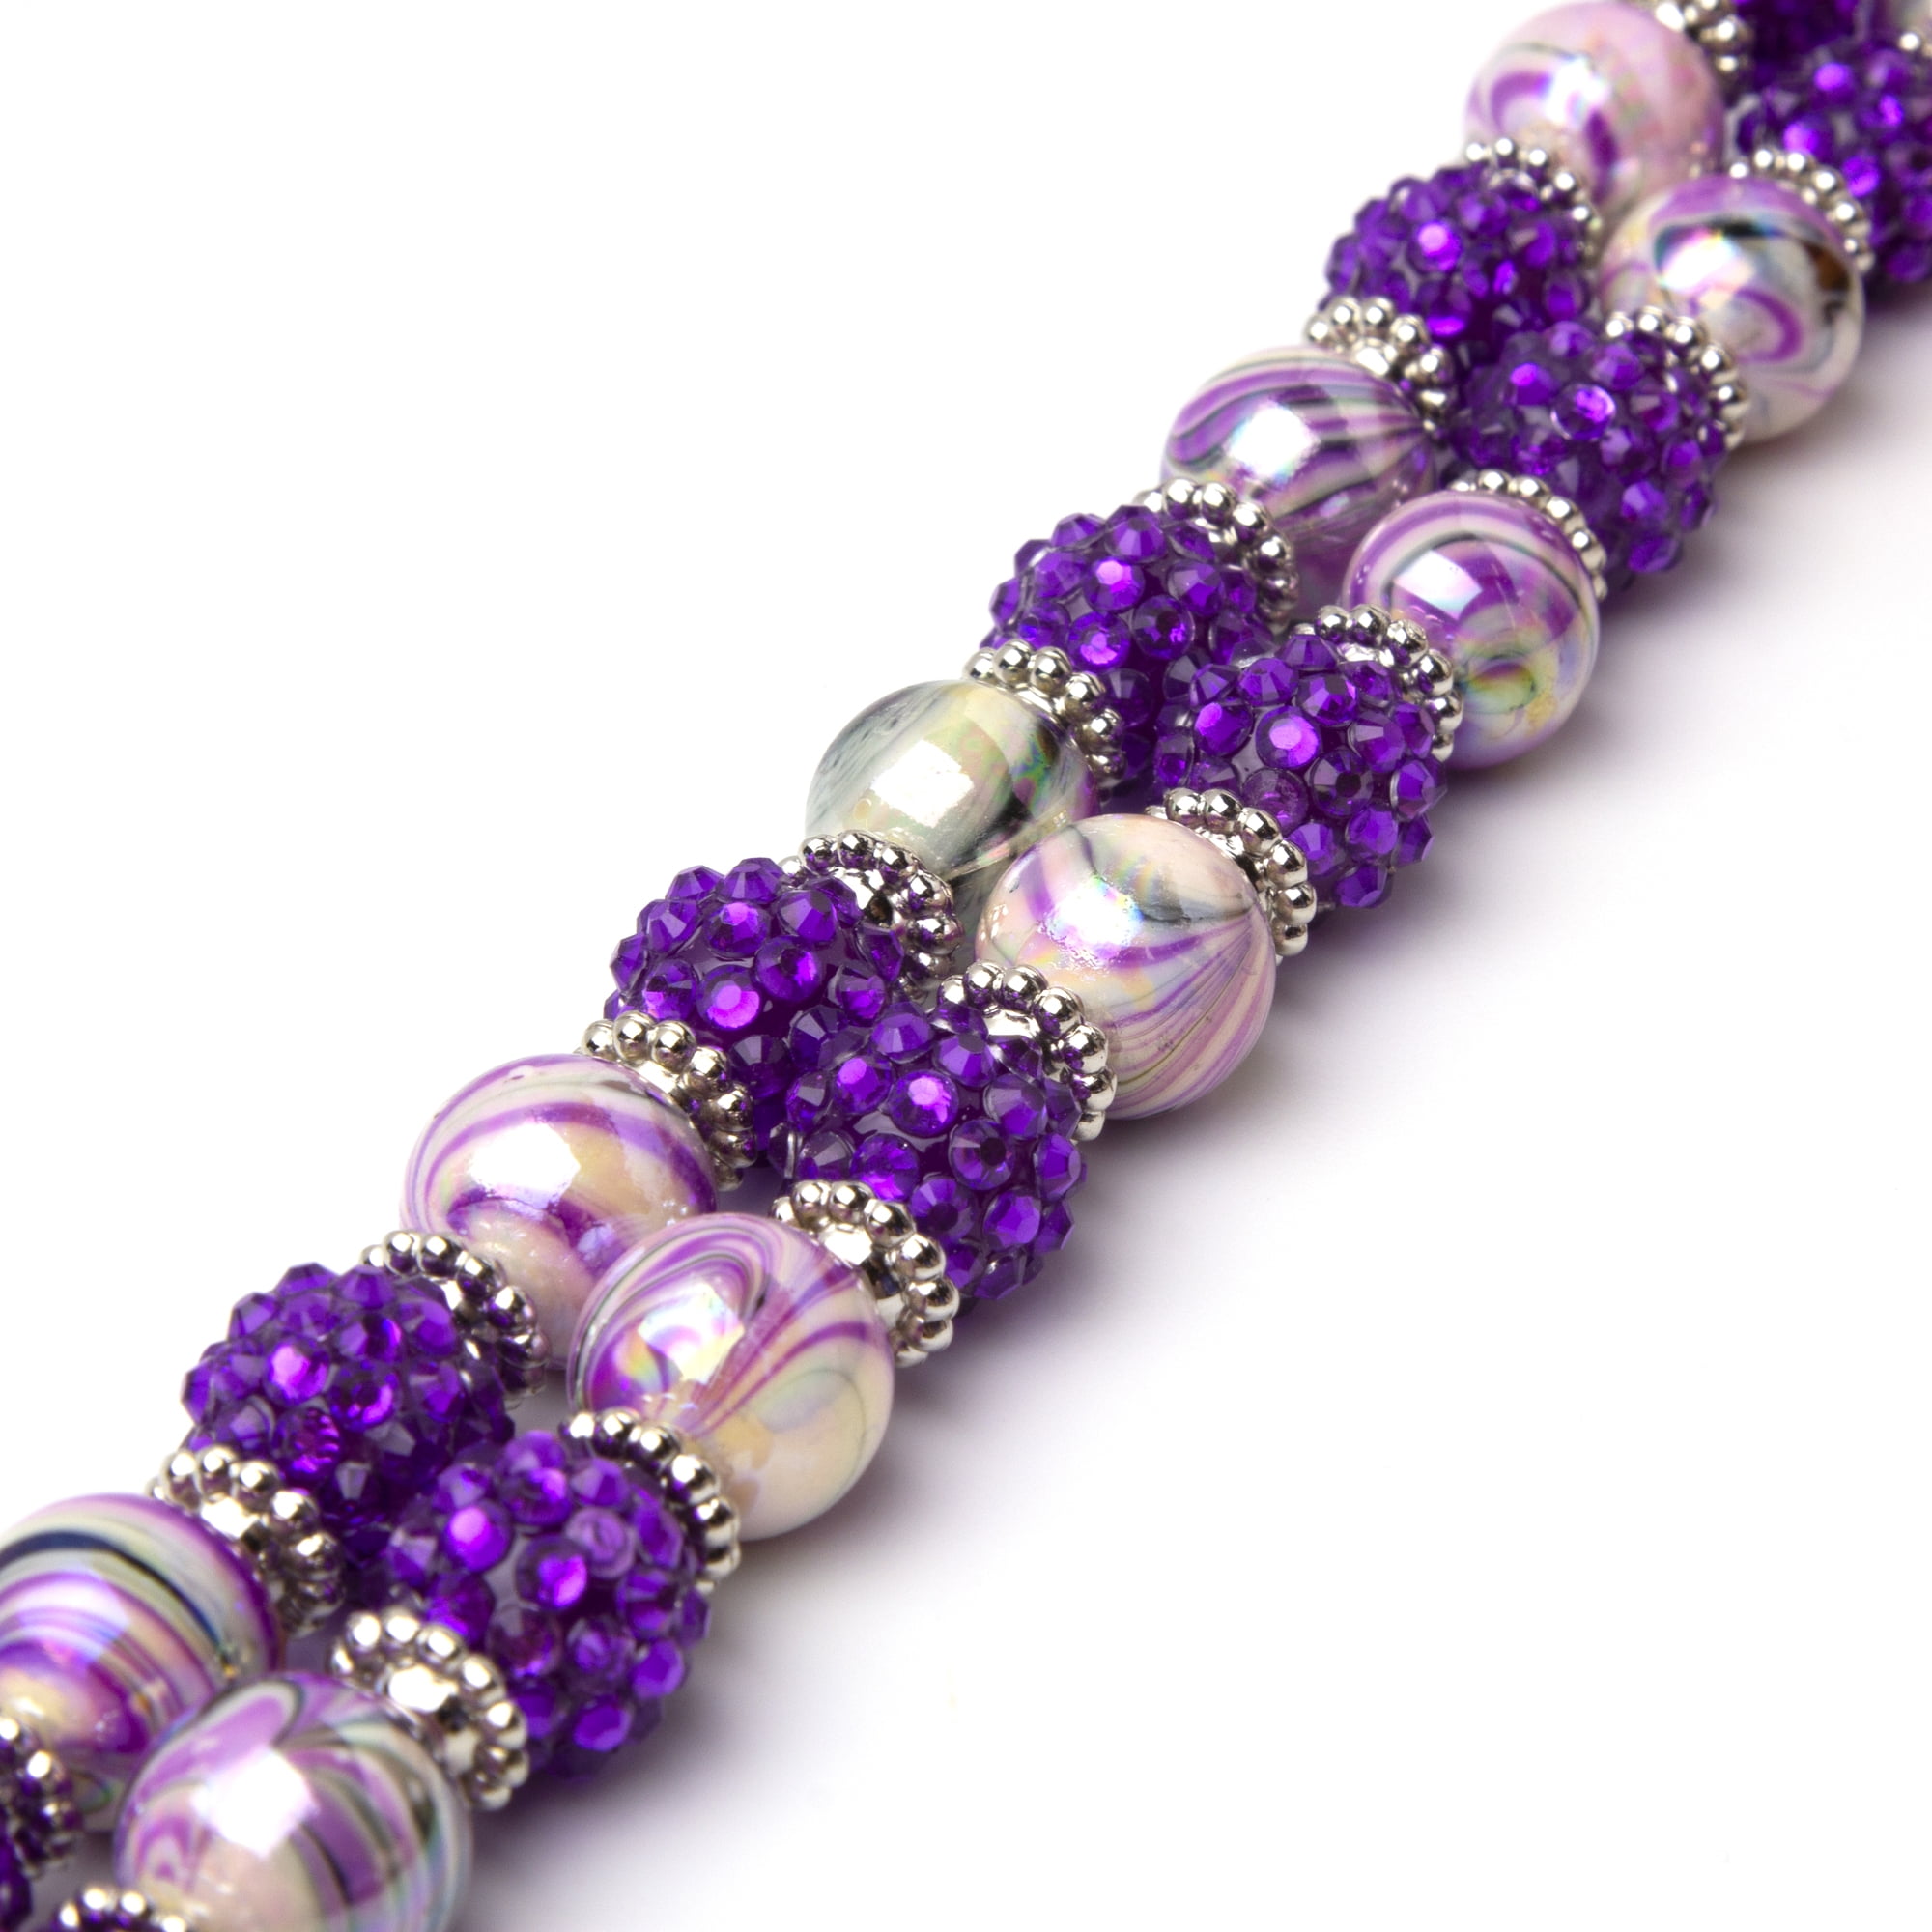 10 PURPLE & WHITE  FLAT OVAL SWIRL LAMPWORK Glass Beads 18mm Jewelry making DIY 